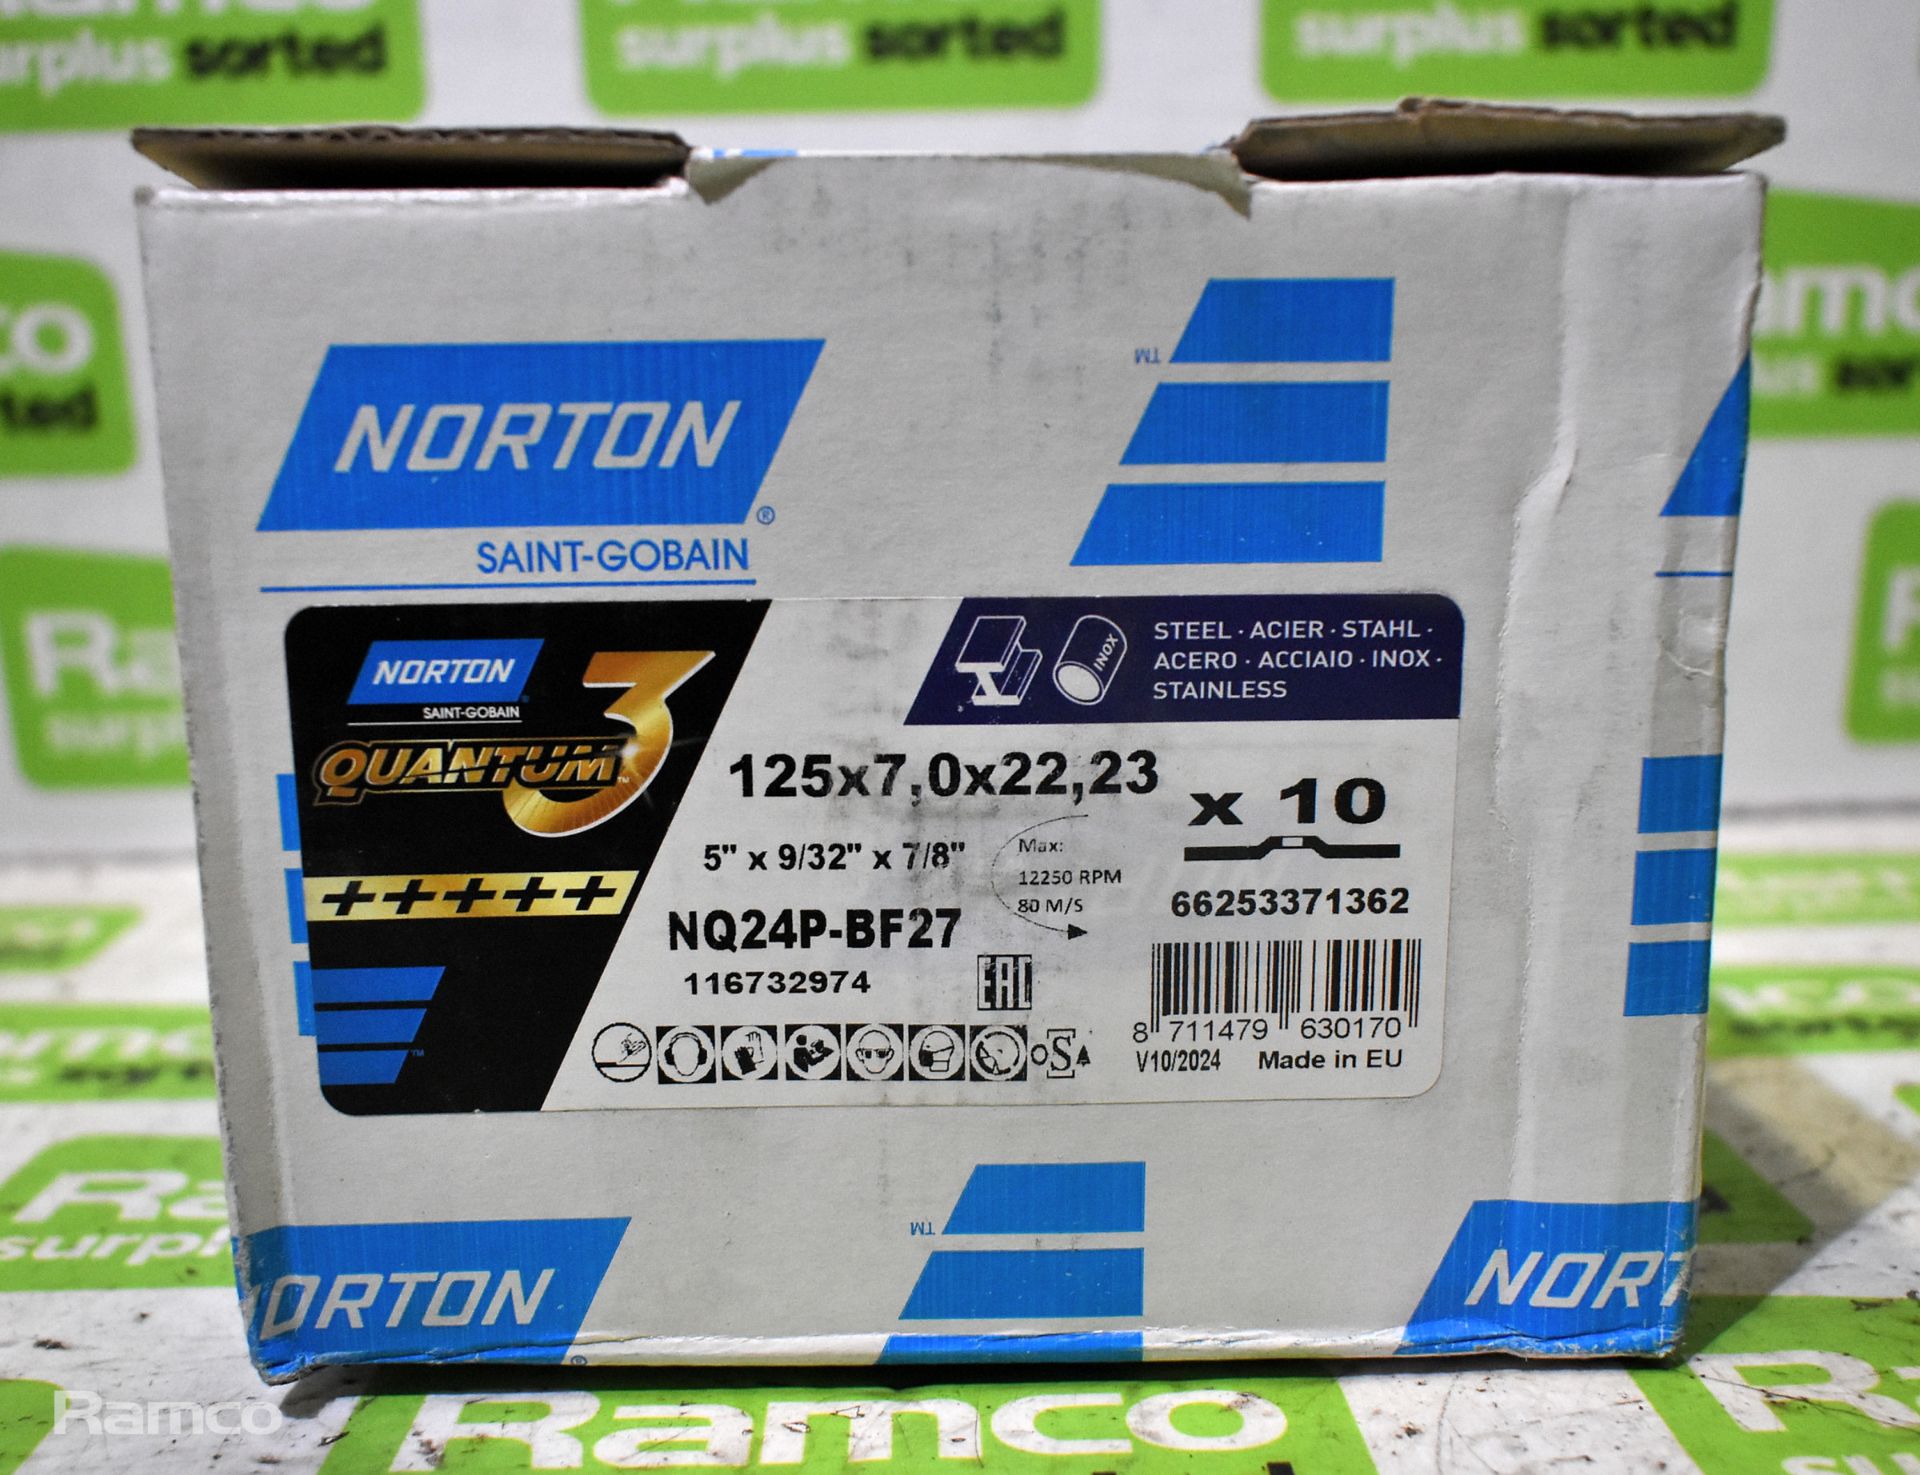 16x boxes of Norton Quantum 3 grinding wheels - 125 x 7.0 x 22.23 - approx 10 wheels per box - Image 5 of 6